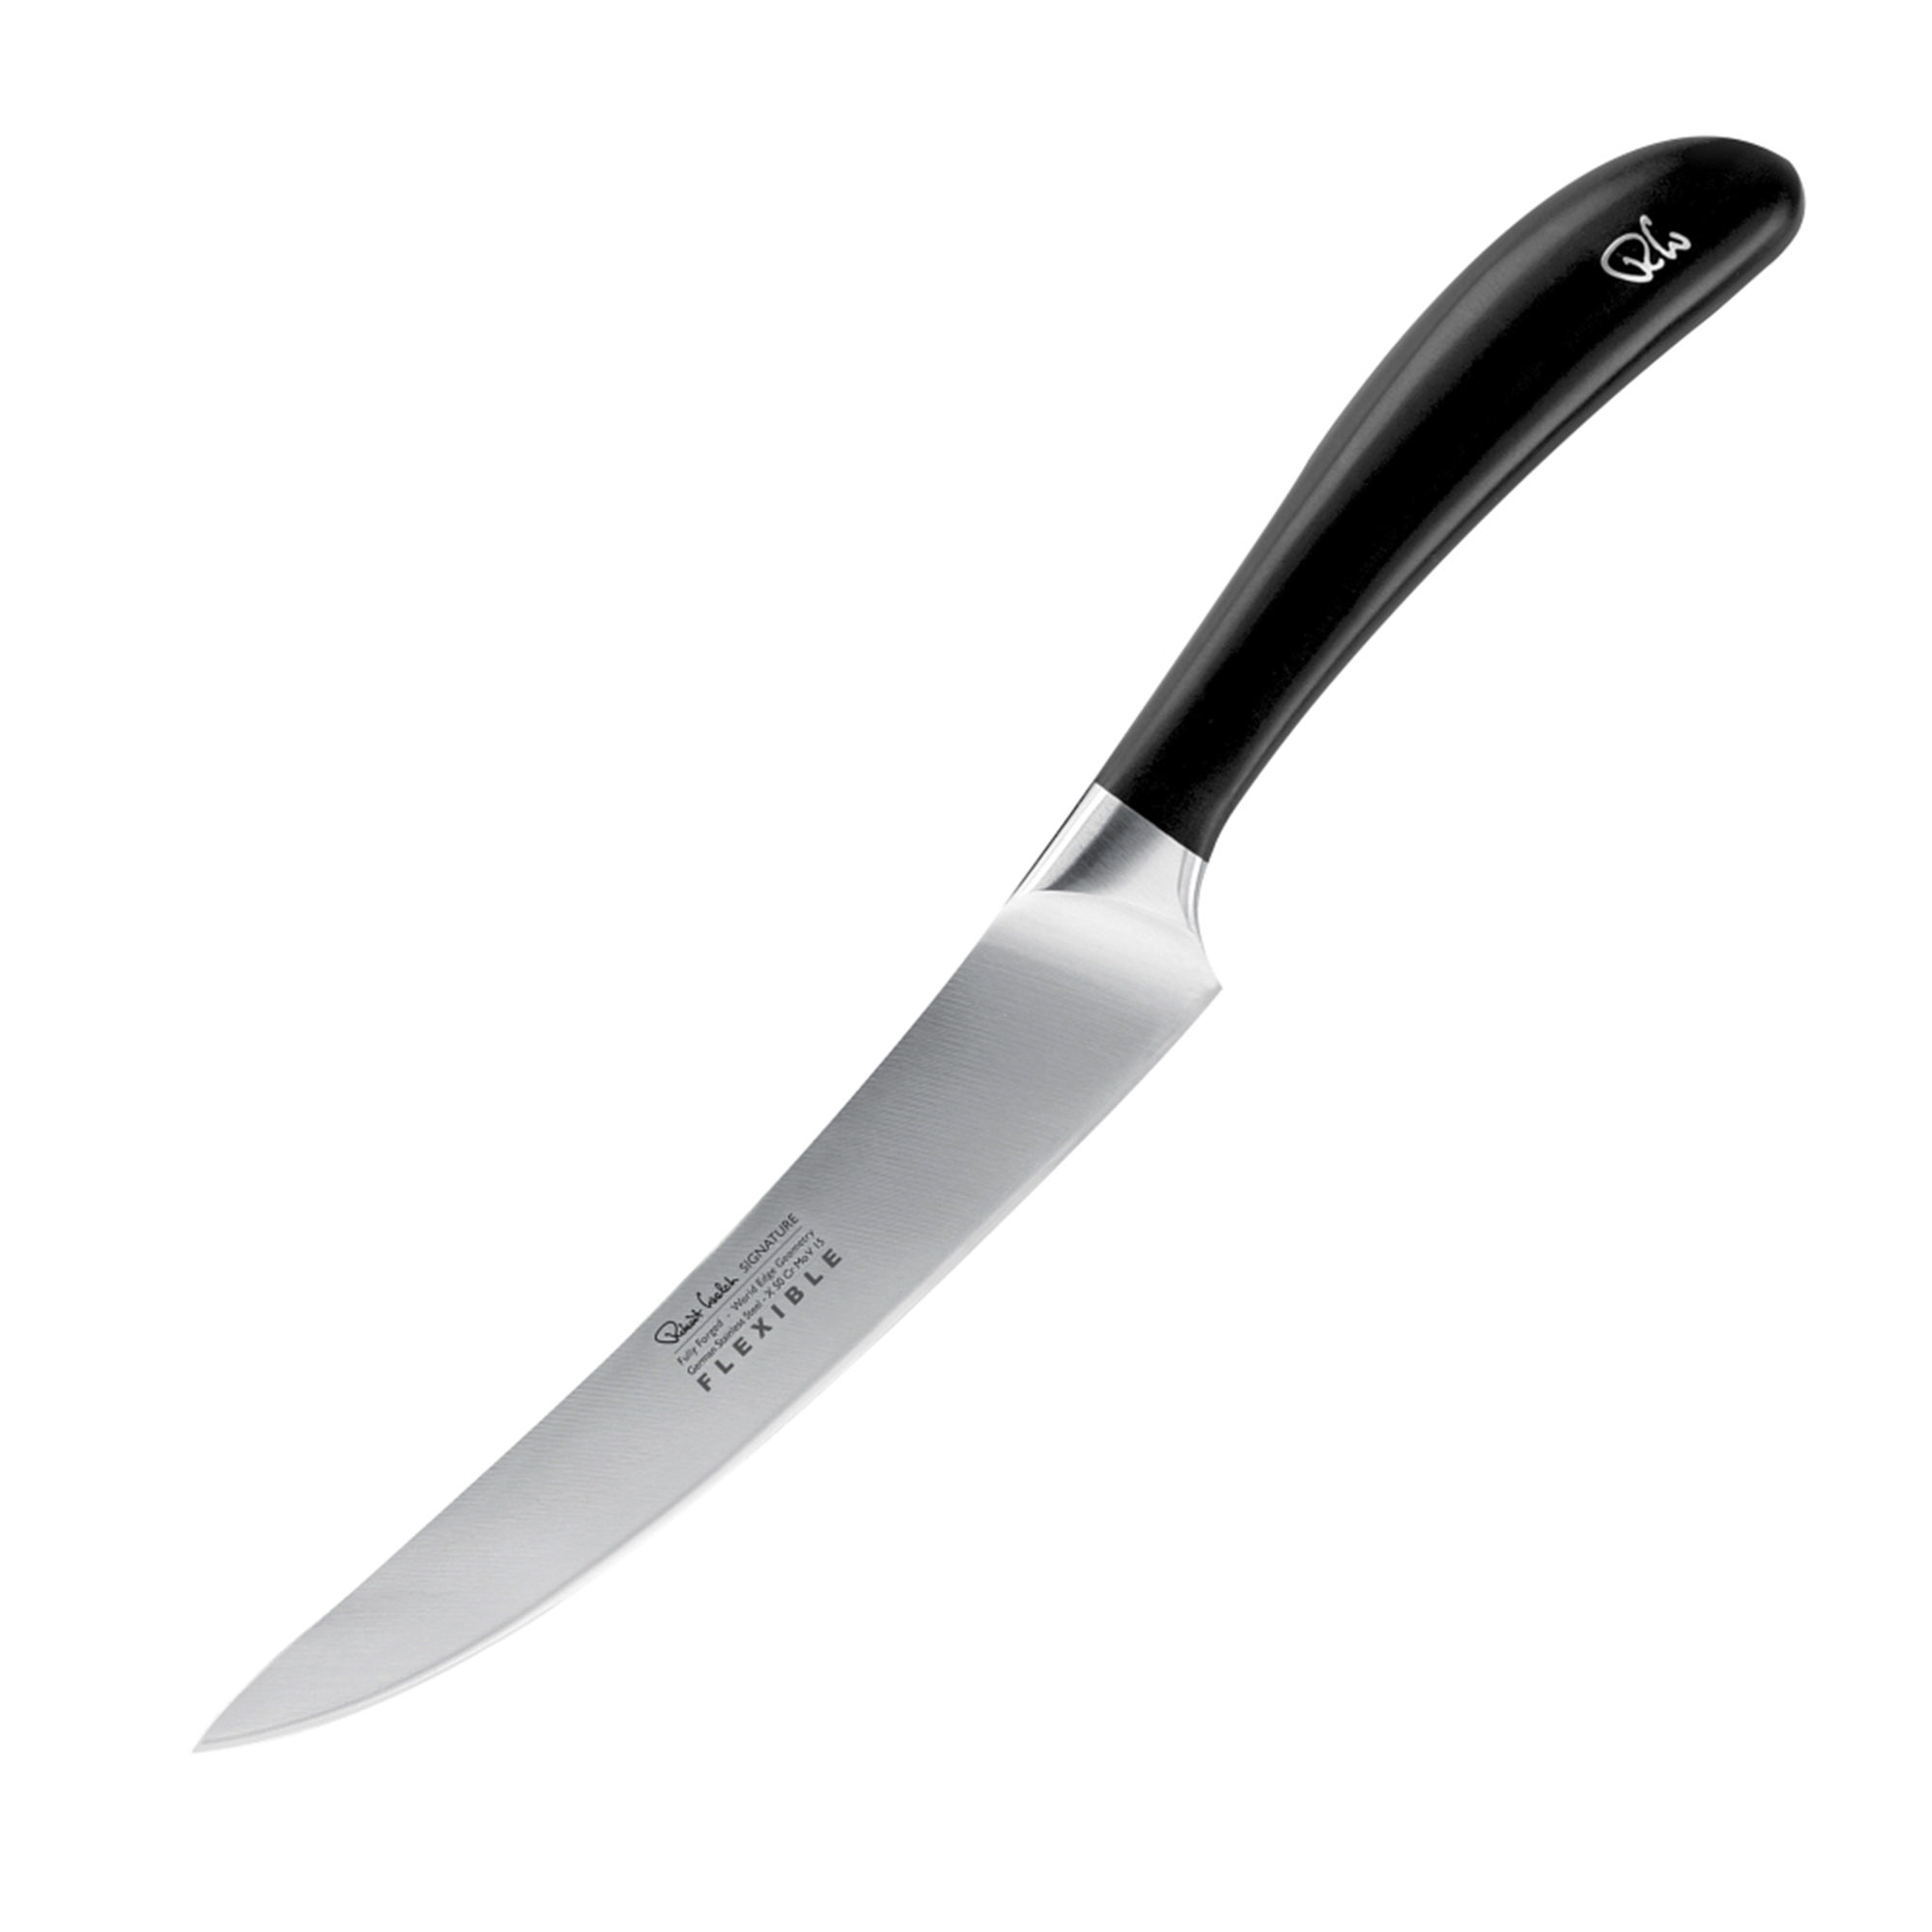 Кухонный филейный нож Robert Welch Signature 16 см нож кухонный 155 мм филейный